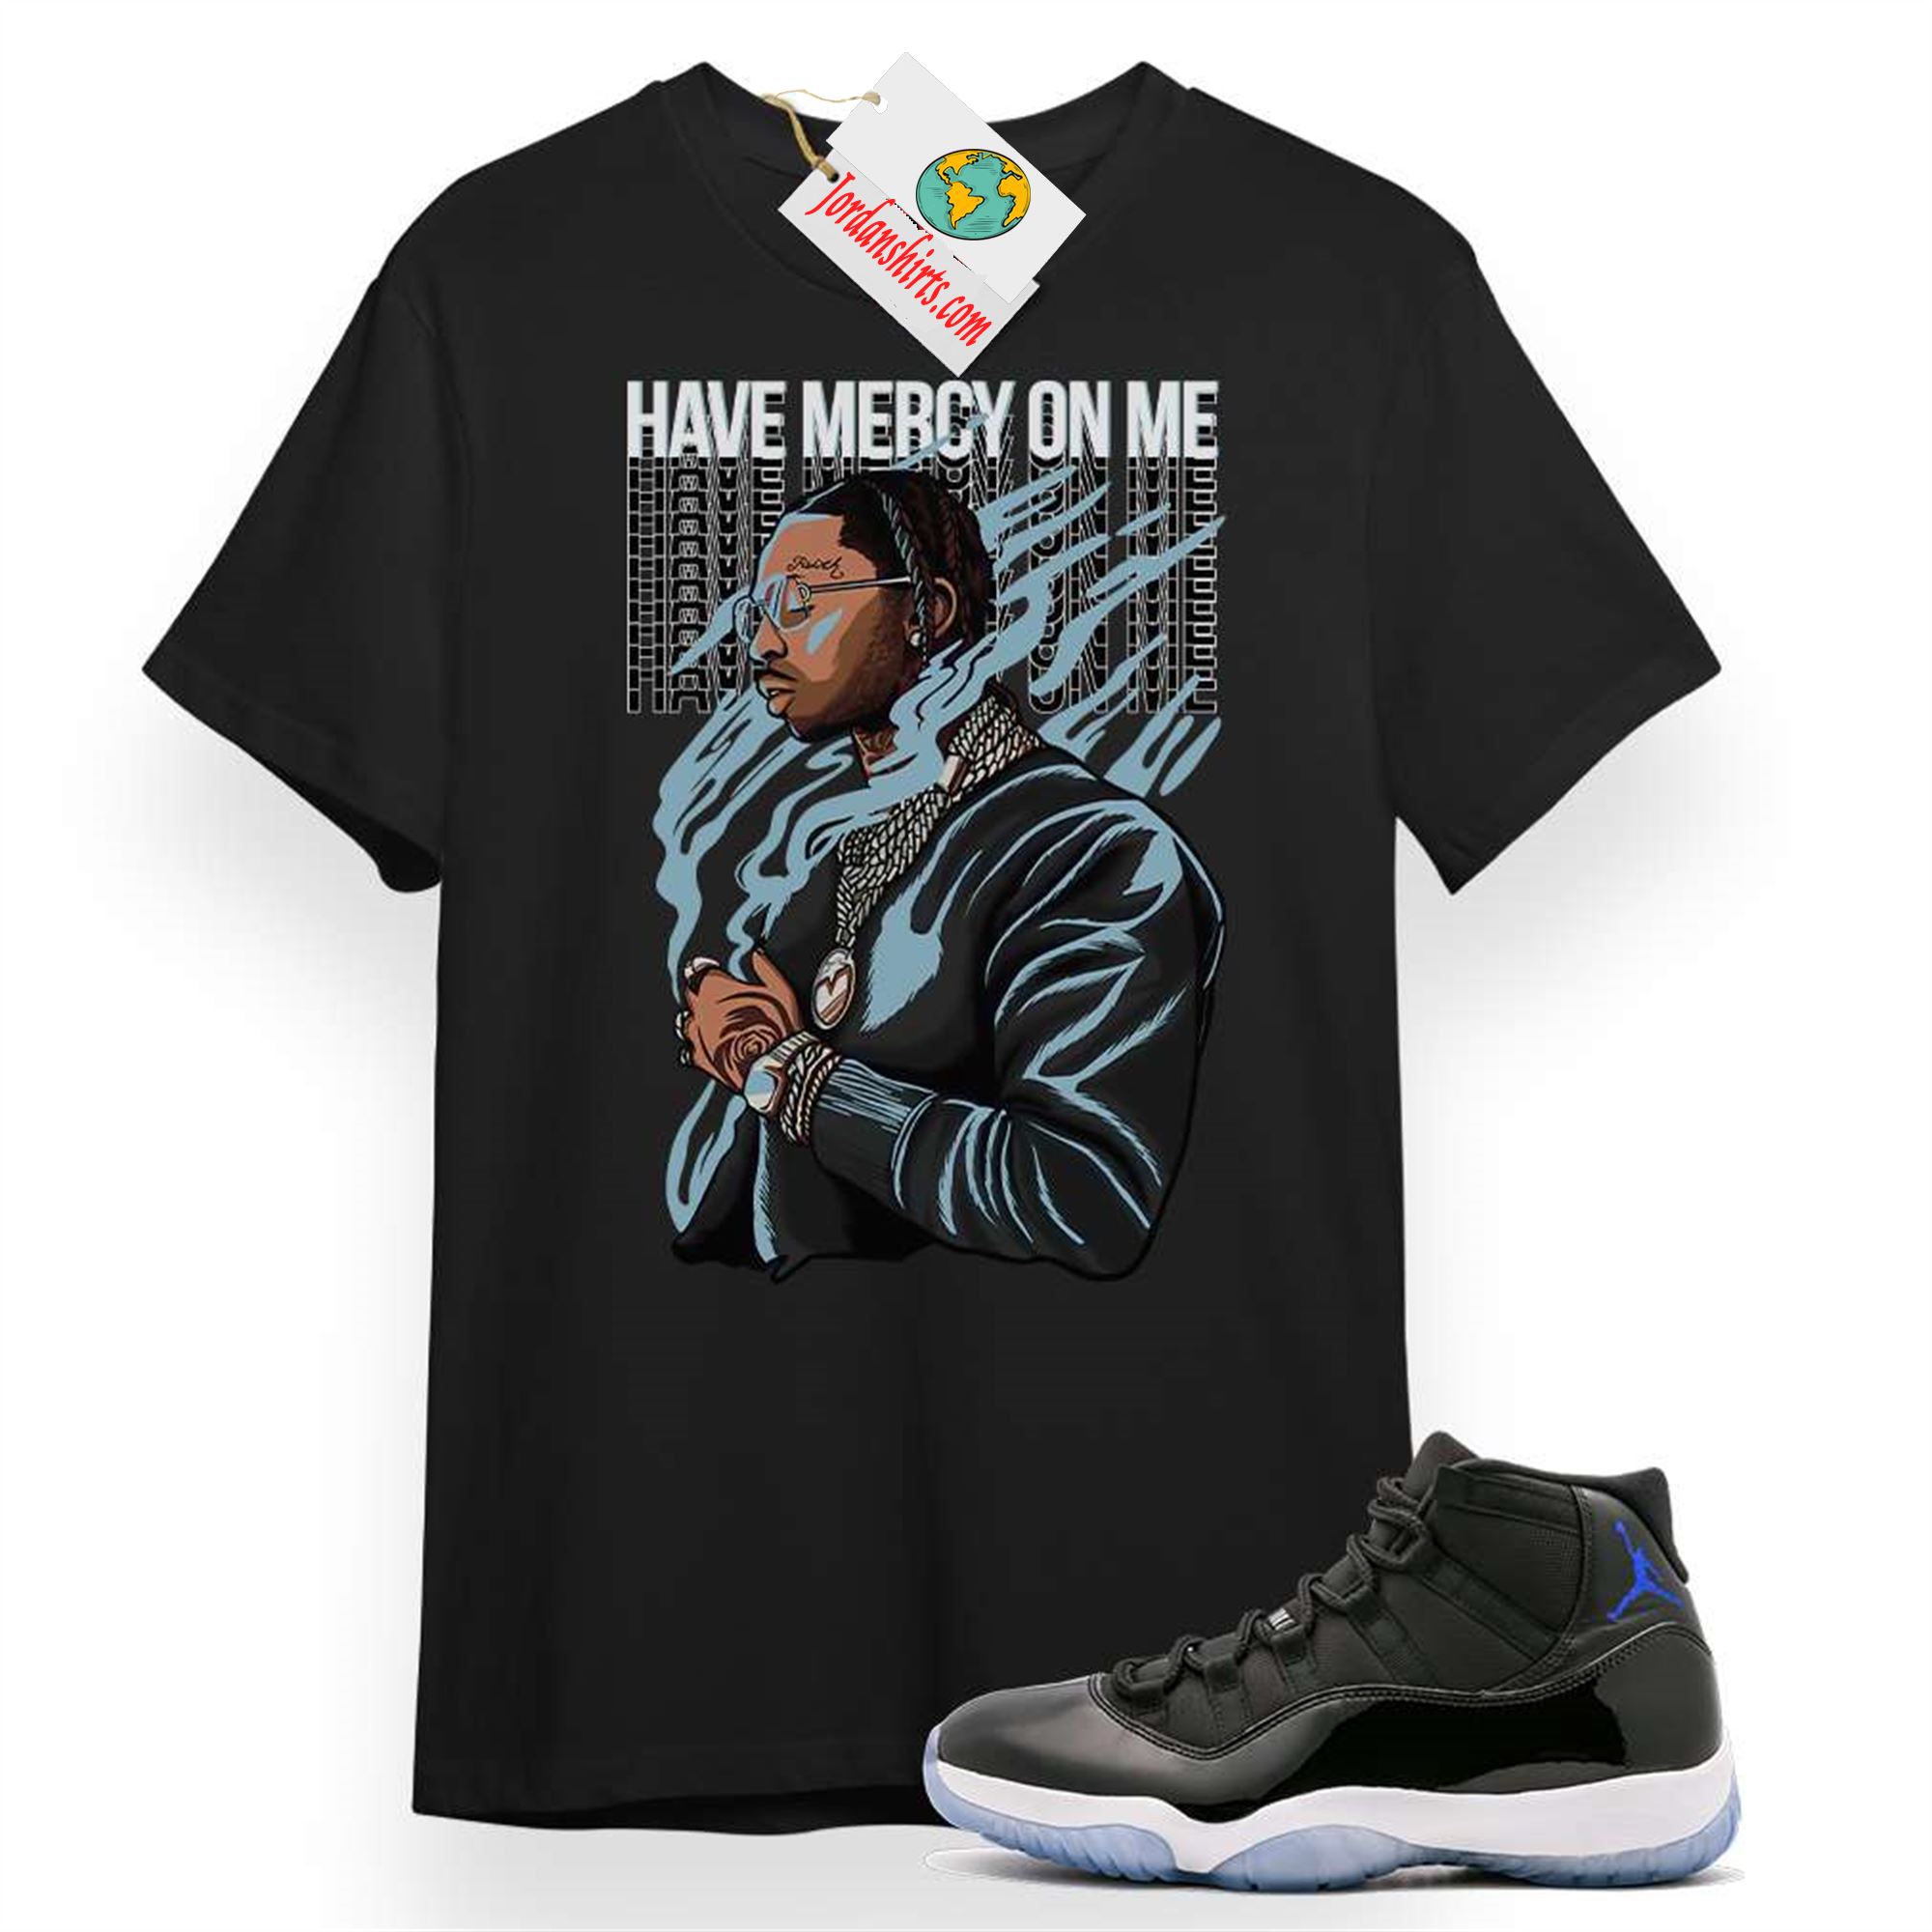 Jordan 11 Shirt, Mercy On Me Black T-shirt Air Jordan 11 Space Jam 11s Full Size Up To 5xl